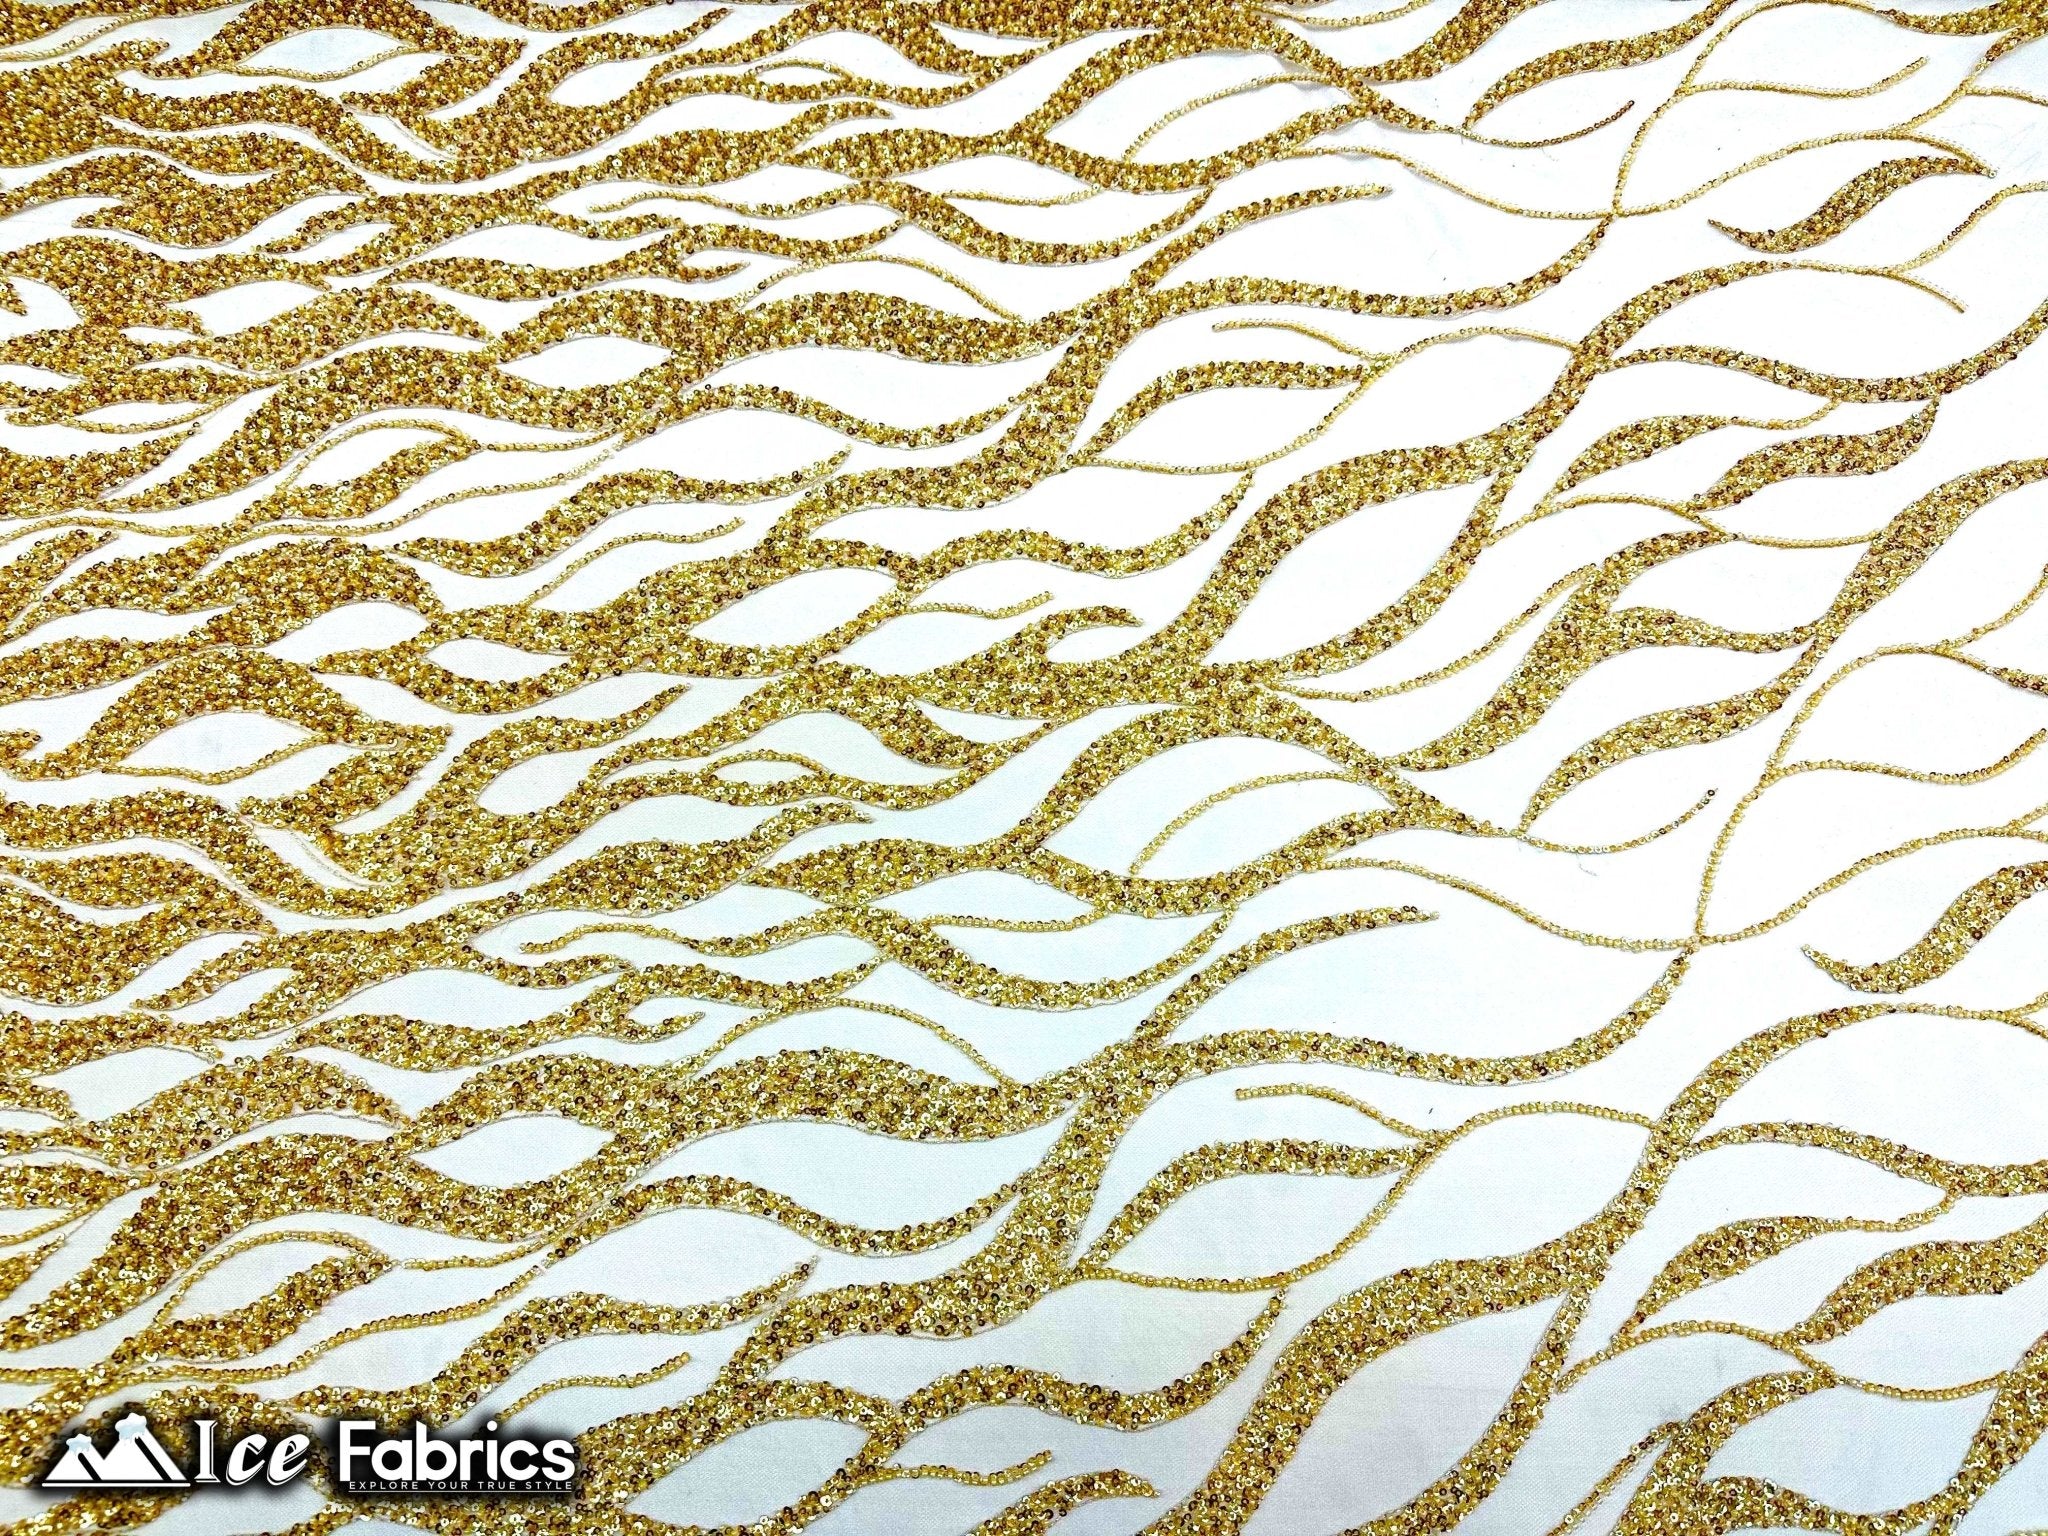 Elegant Heavy Beaded Fabric Lace Fabric with SequinICE FABRICSICE FABRICSGoldBy The Yard (54" Wide)Elegant Heavy Beaded Fabric Lace Fabric with Sequin ICE FABRICS Gold